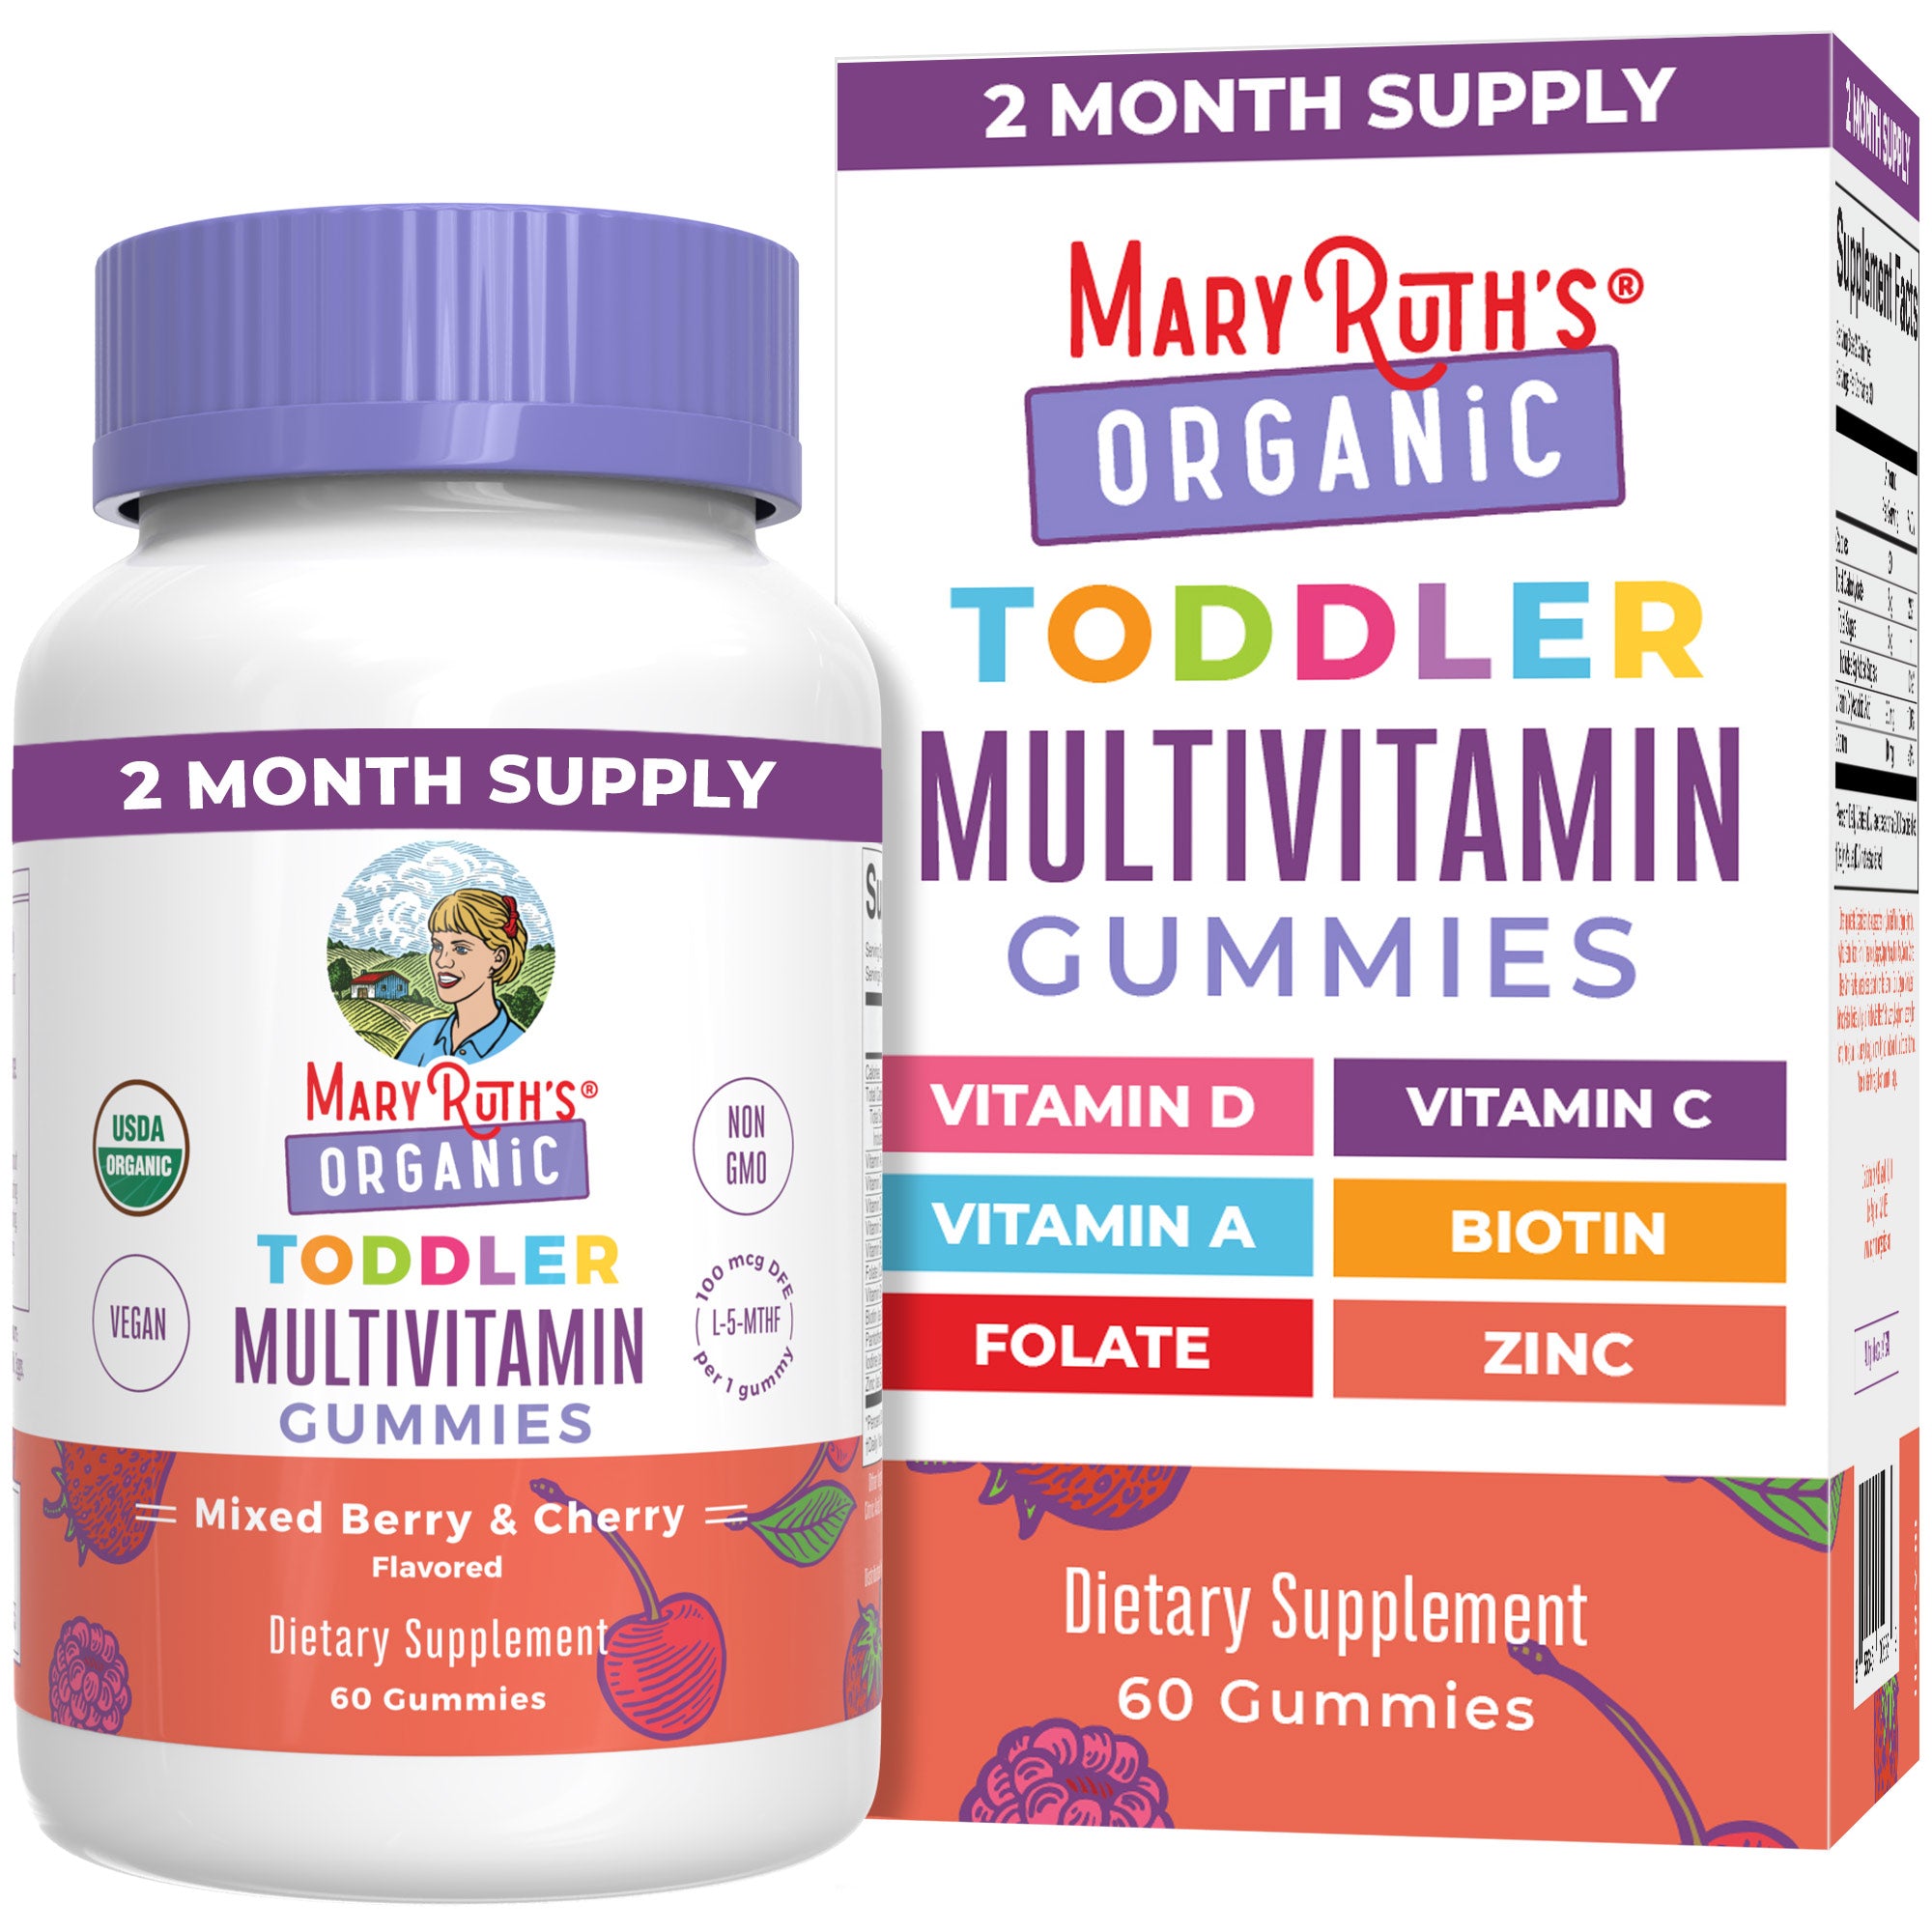 Organic Toddler Multivitamin Gummies